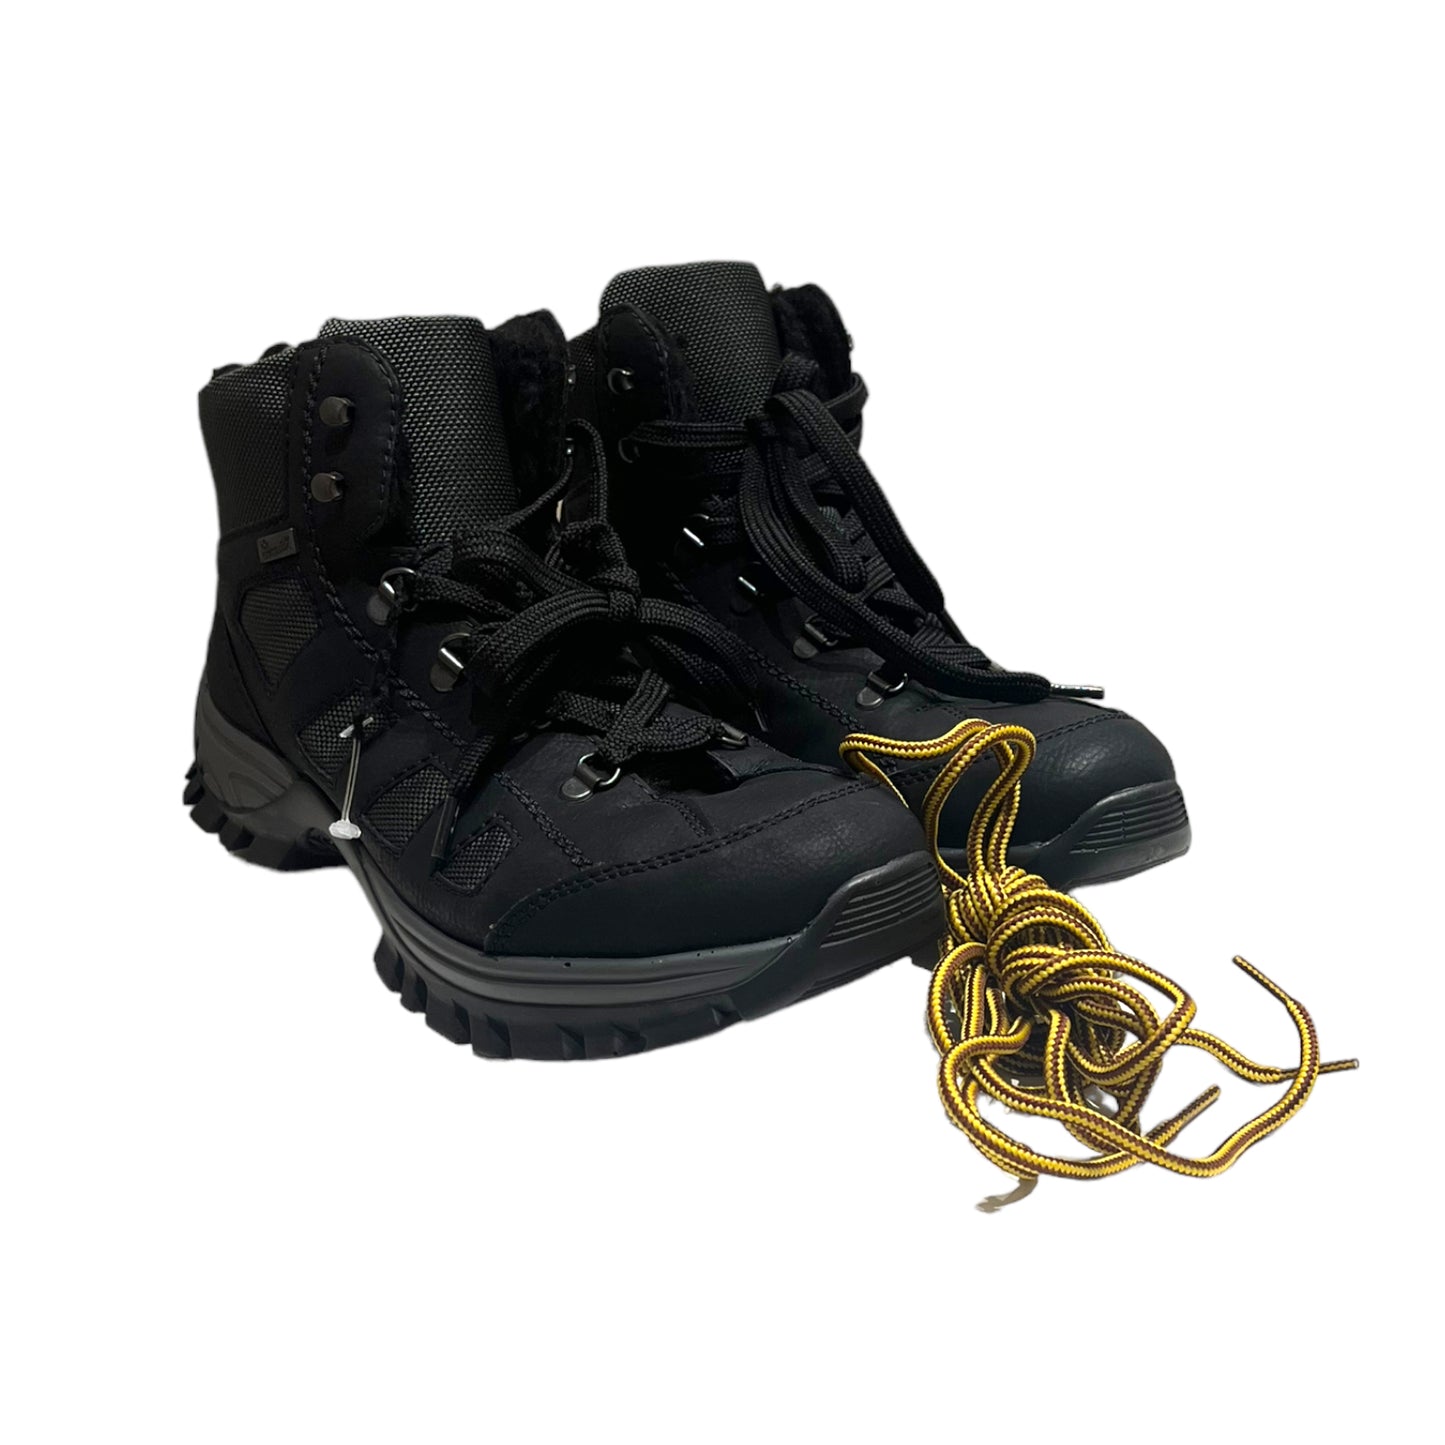 NEW Salomon Black Boots